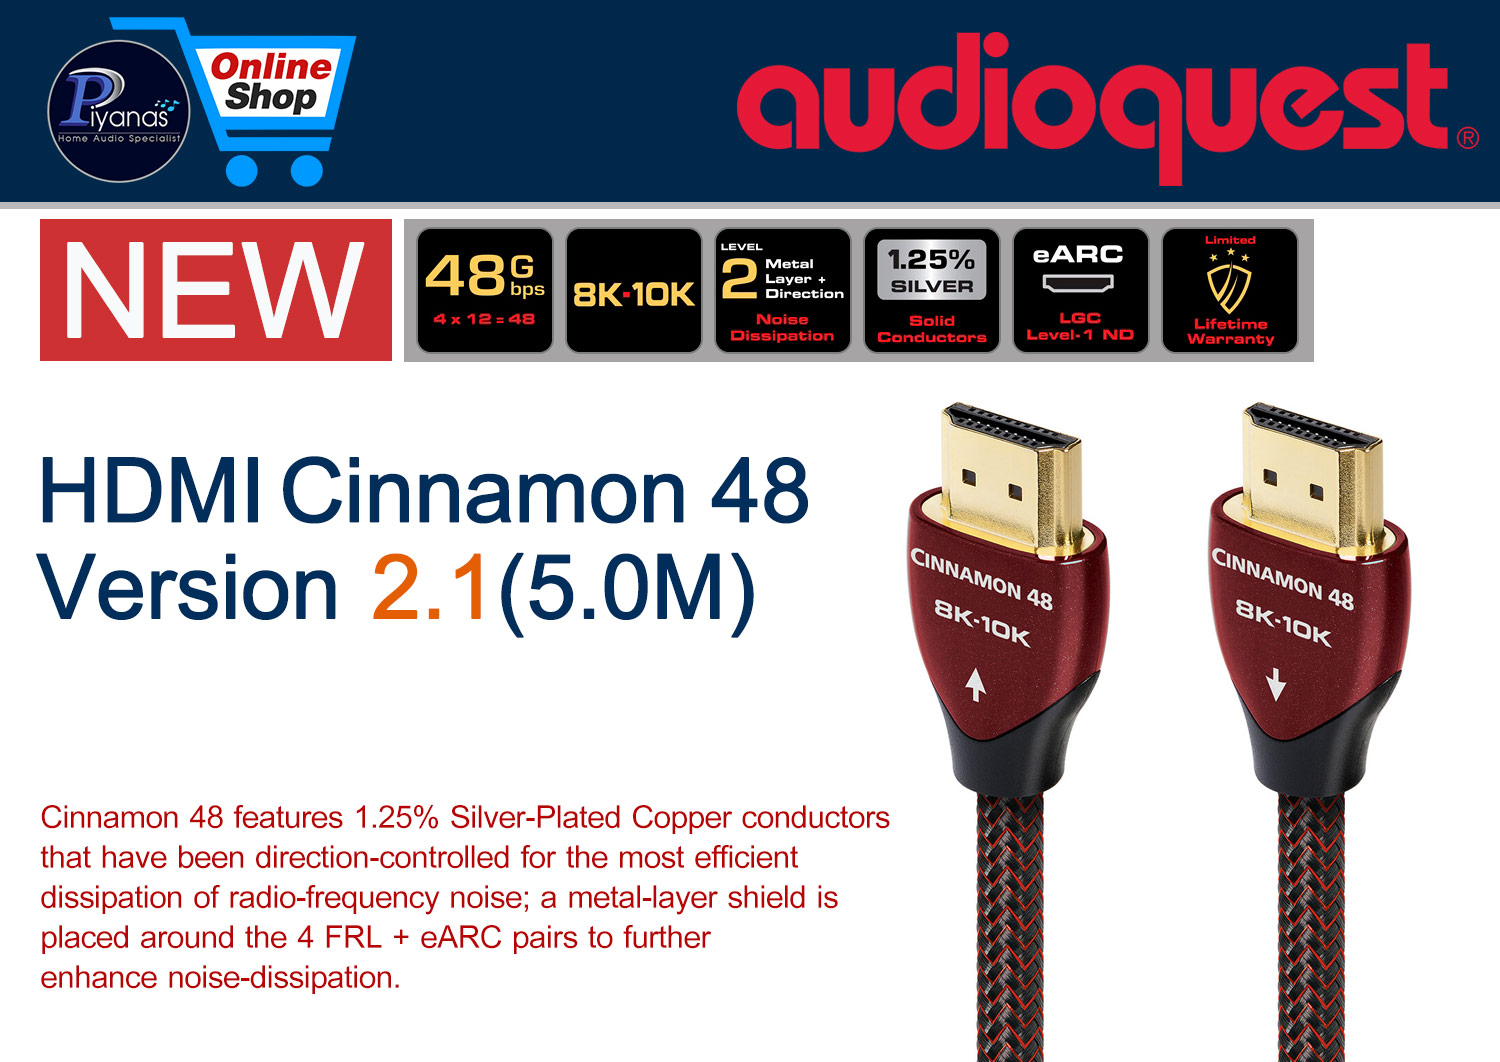 HDMI-Cinnamon 48 Version 2.1 (5.0M)